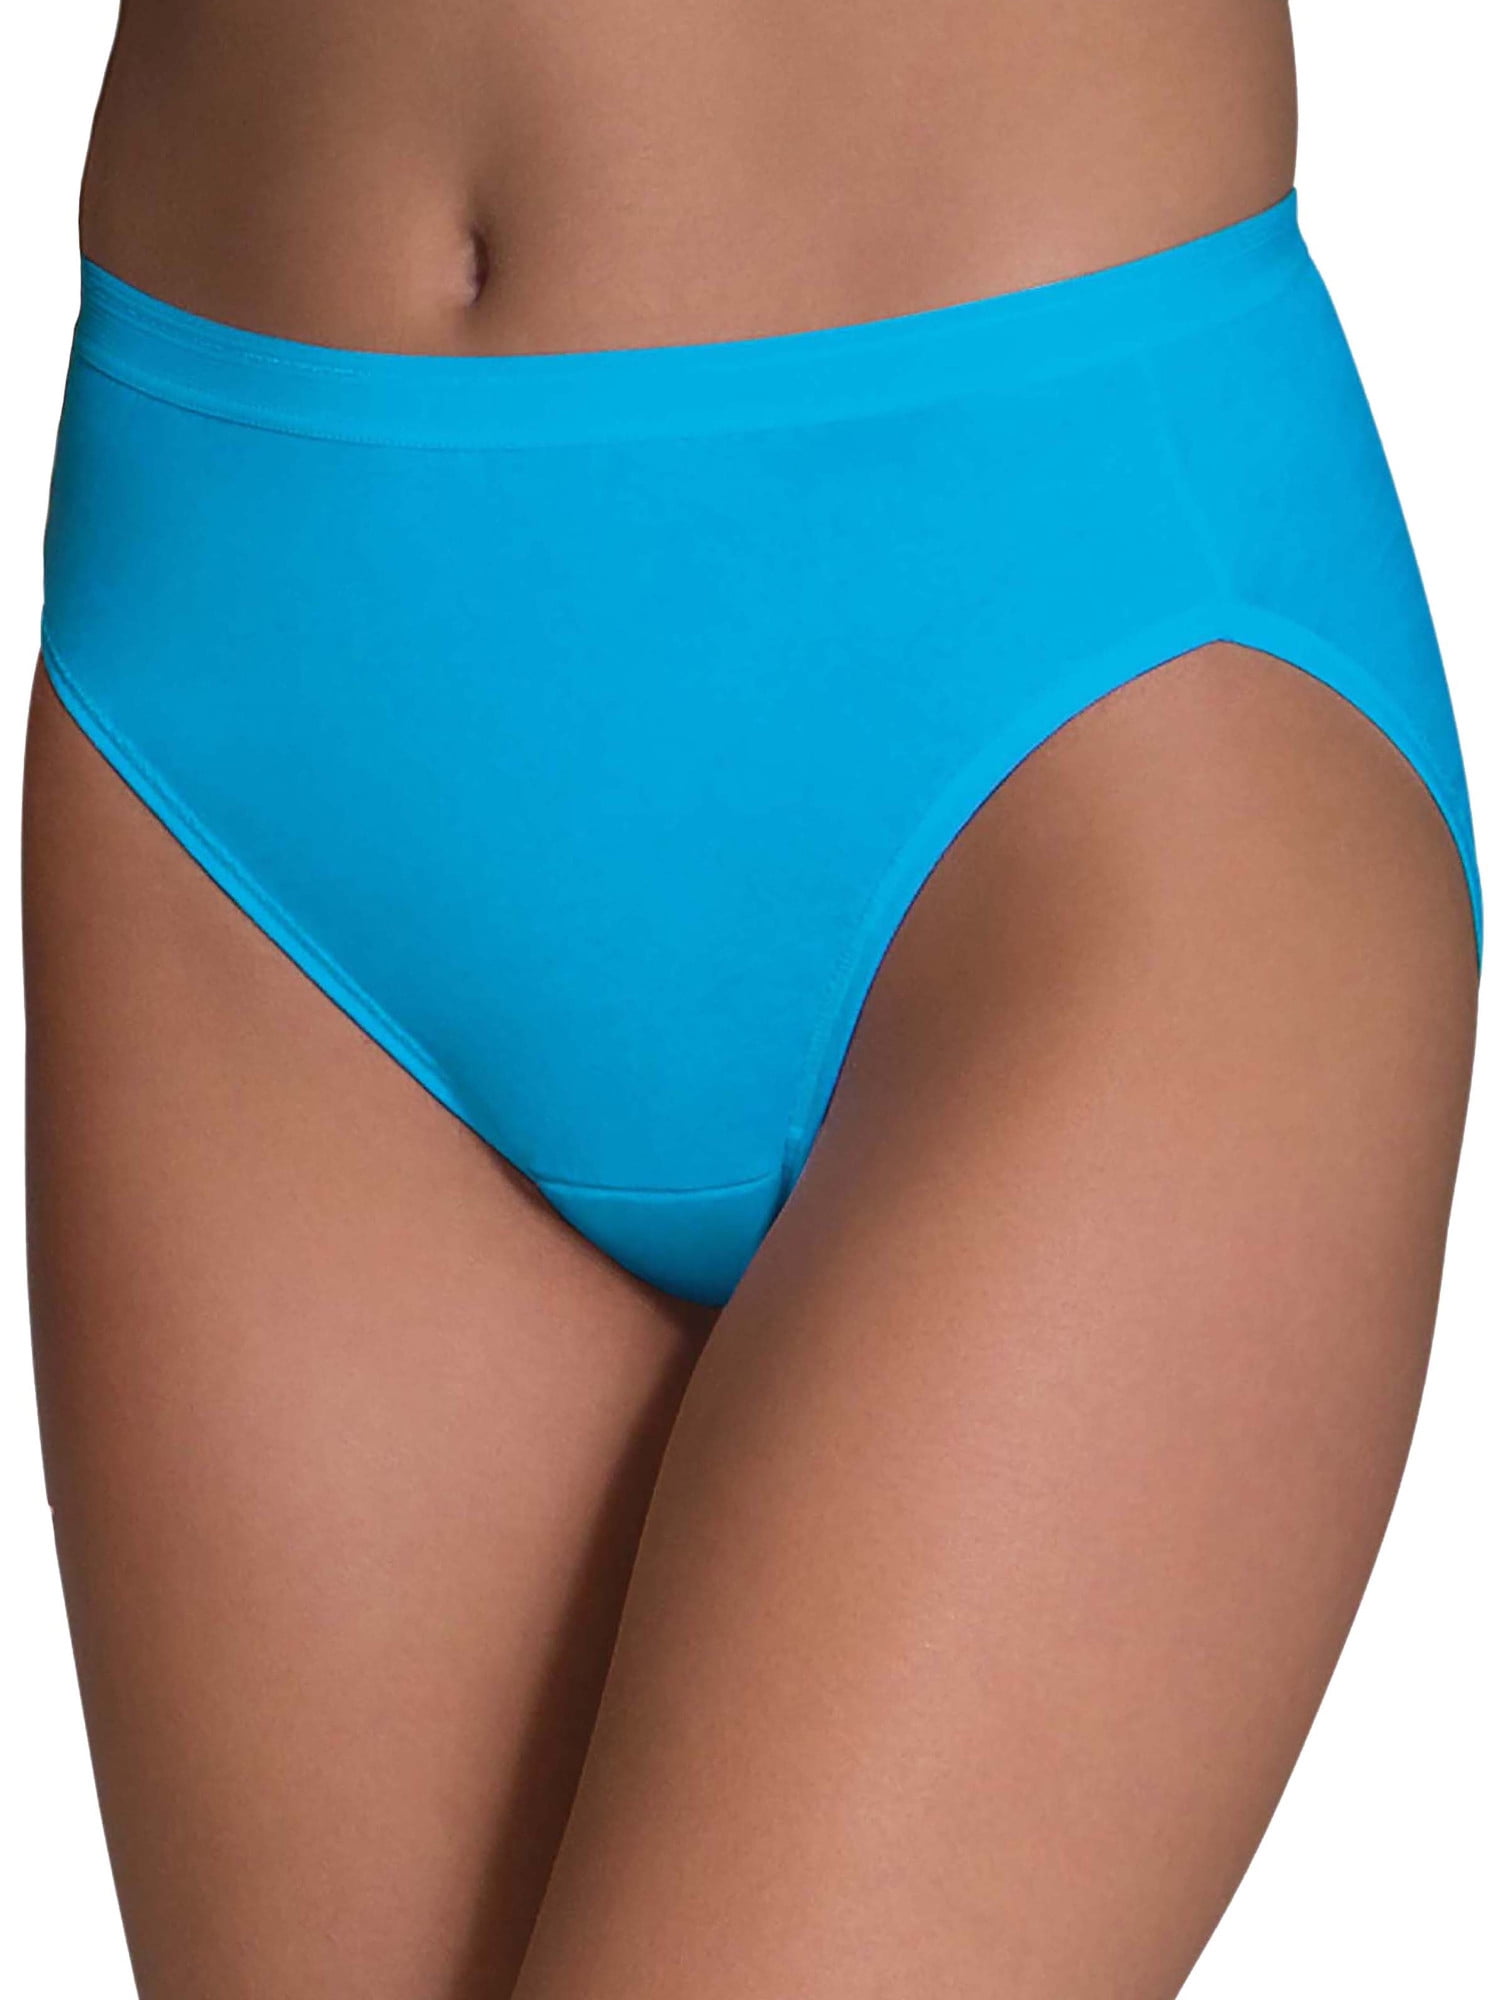 Best Fitting Panty Women's Seamless Hi-Cut Panties, 6-Pack 